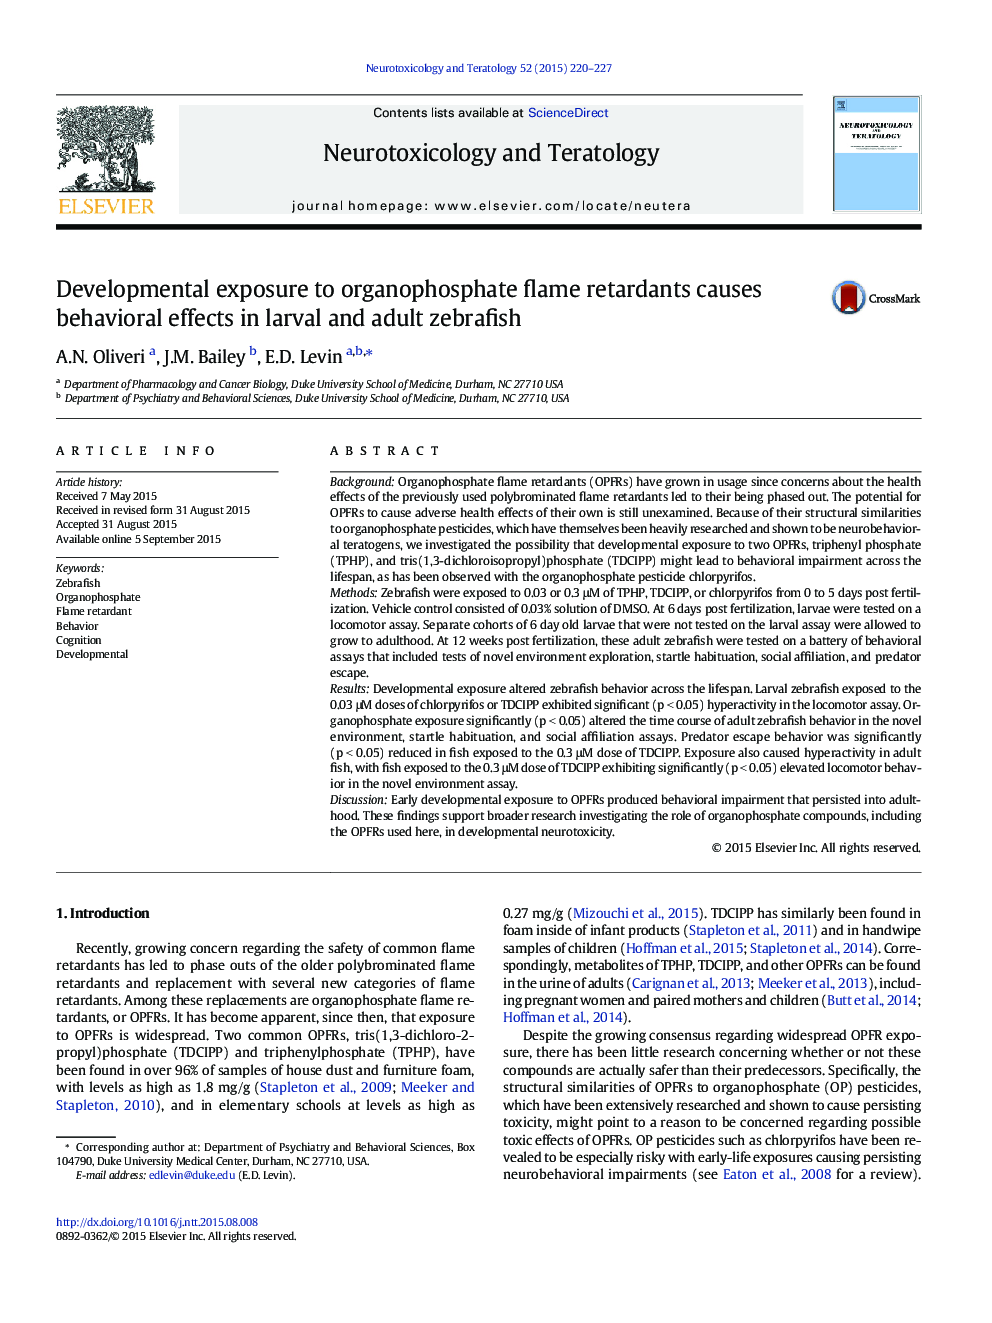 Developmental exposure to organophosphate flame retardants causes behavioral effects in larval and adult zebrafish